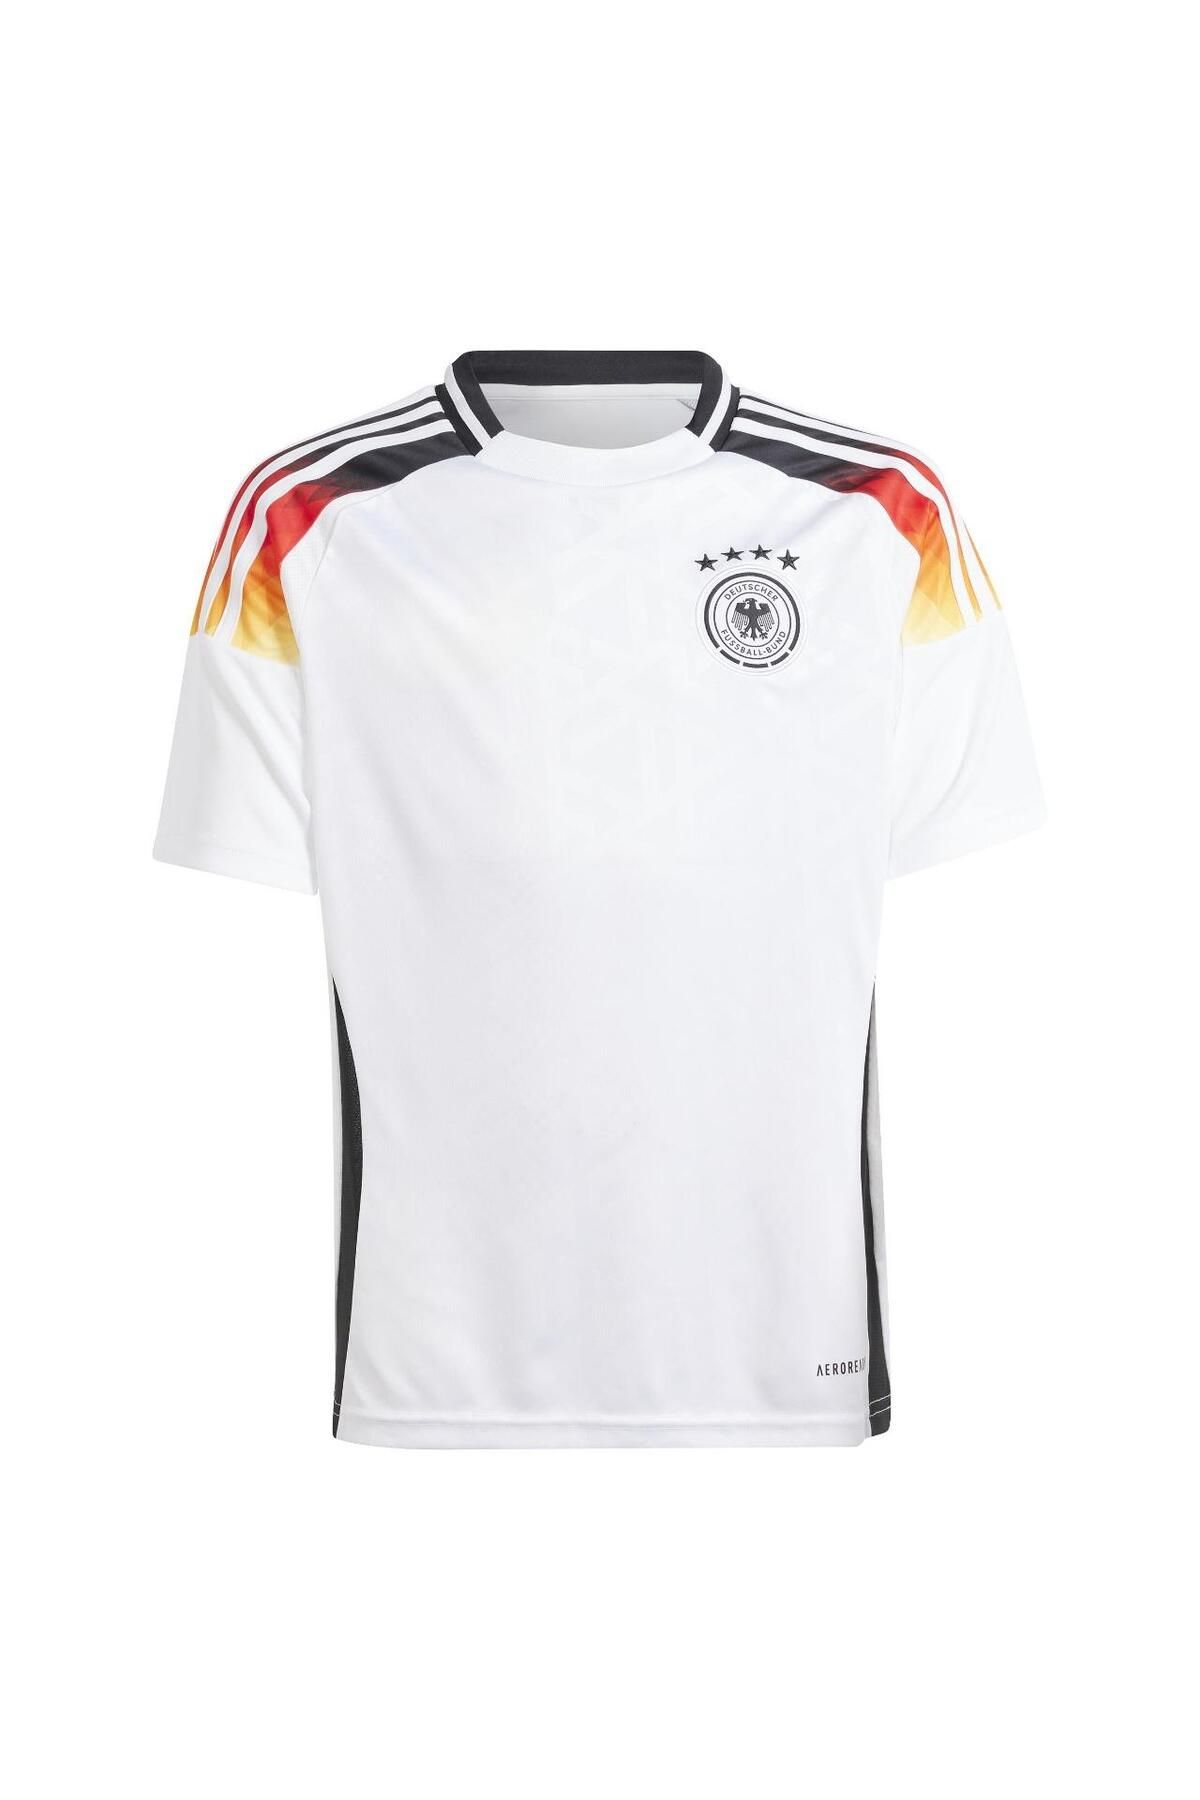 Alaturka Mix Almanya Milli Takım 24/25 Yeni Sezon Futbol Forması Beyaz